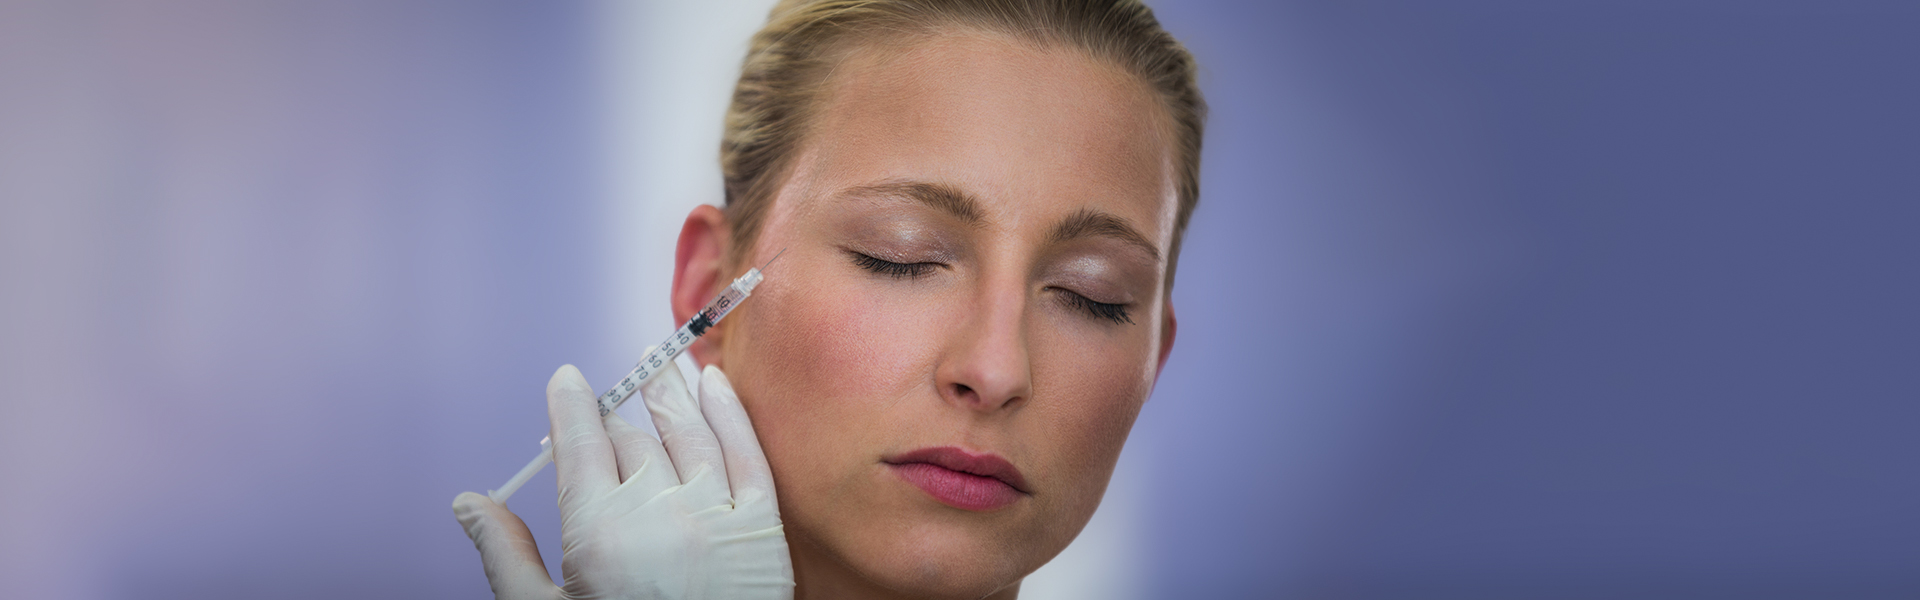 How Botox Can Help TMJ and Headaches